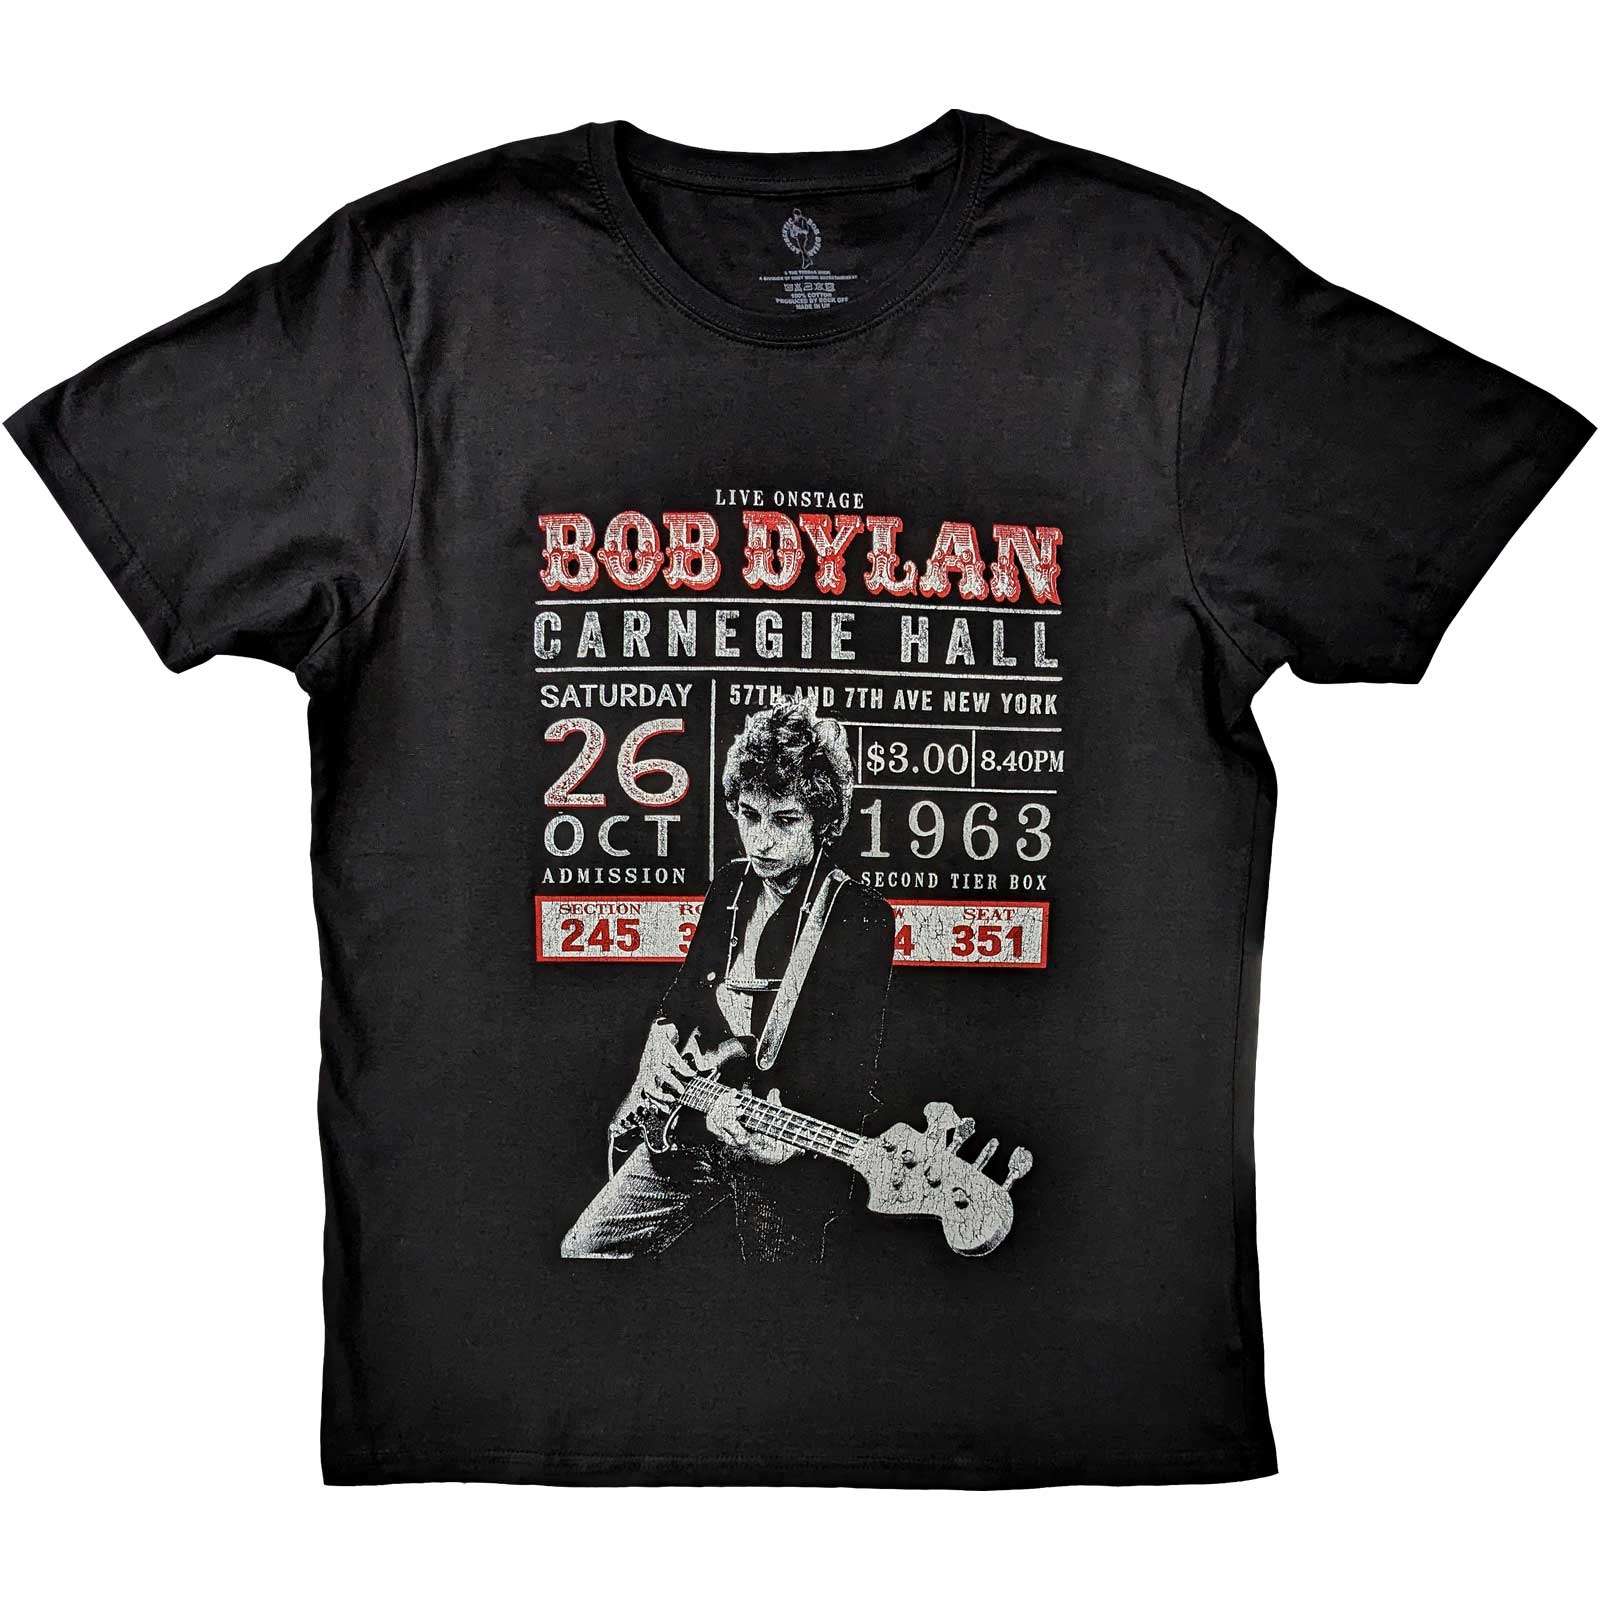 Bob Dylan Carnegie Hall Shirt